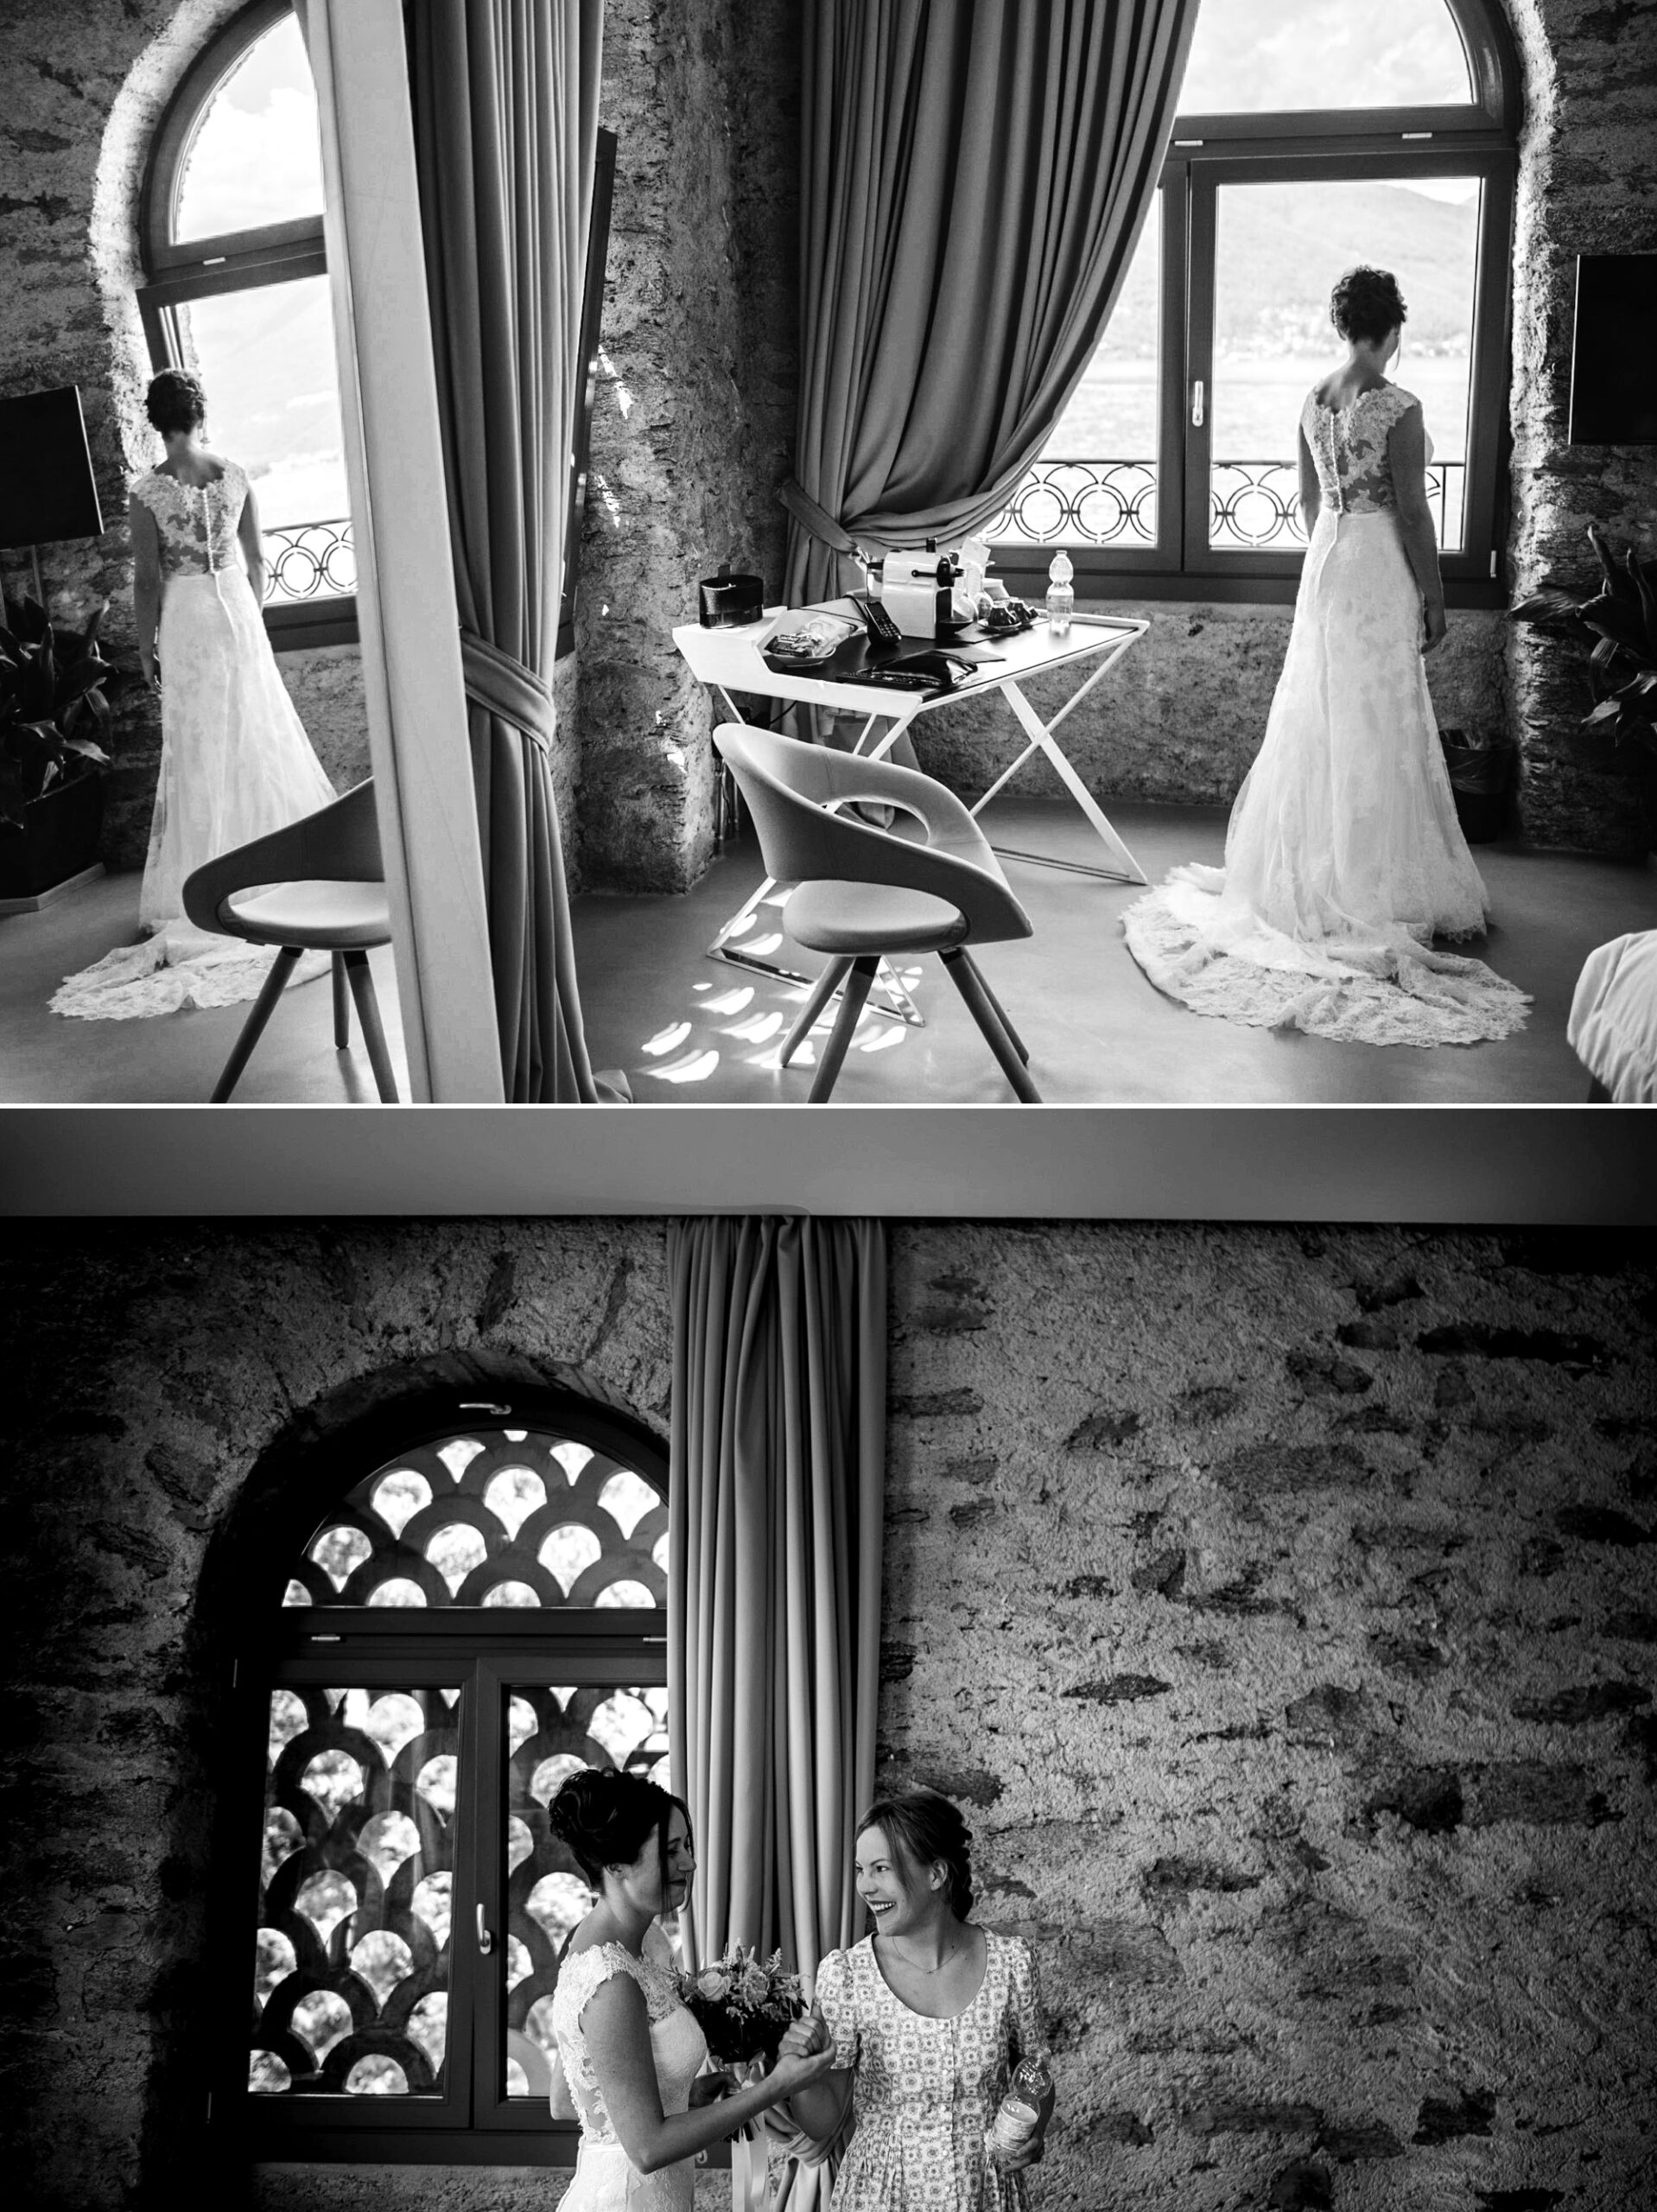 Wedding photography photos in Lake Maggiore